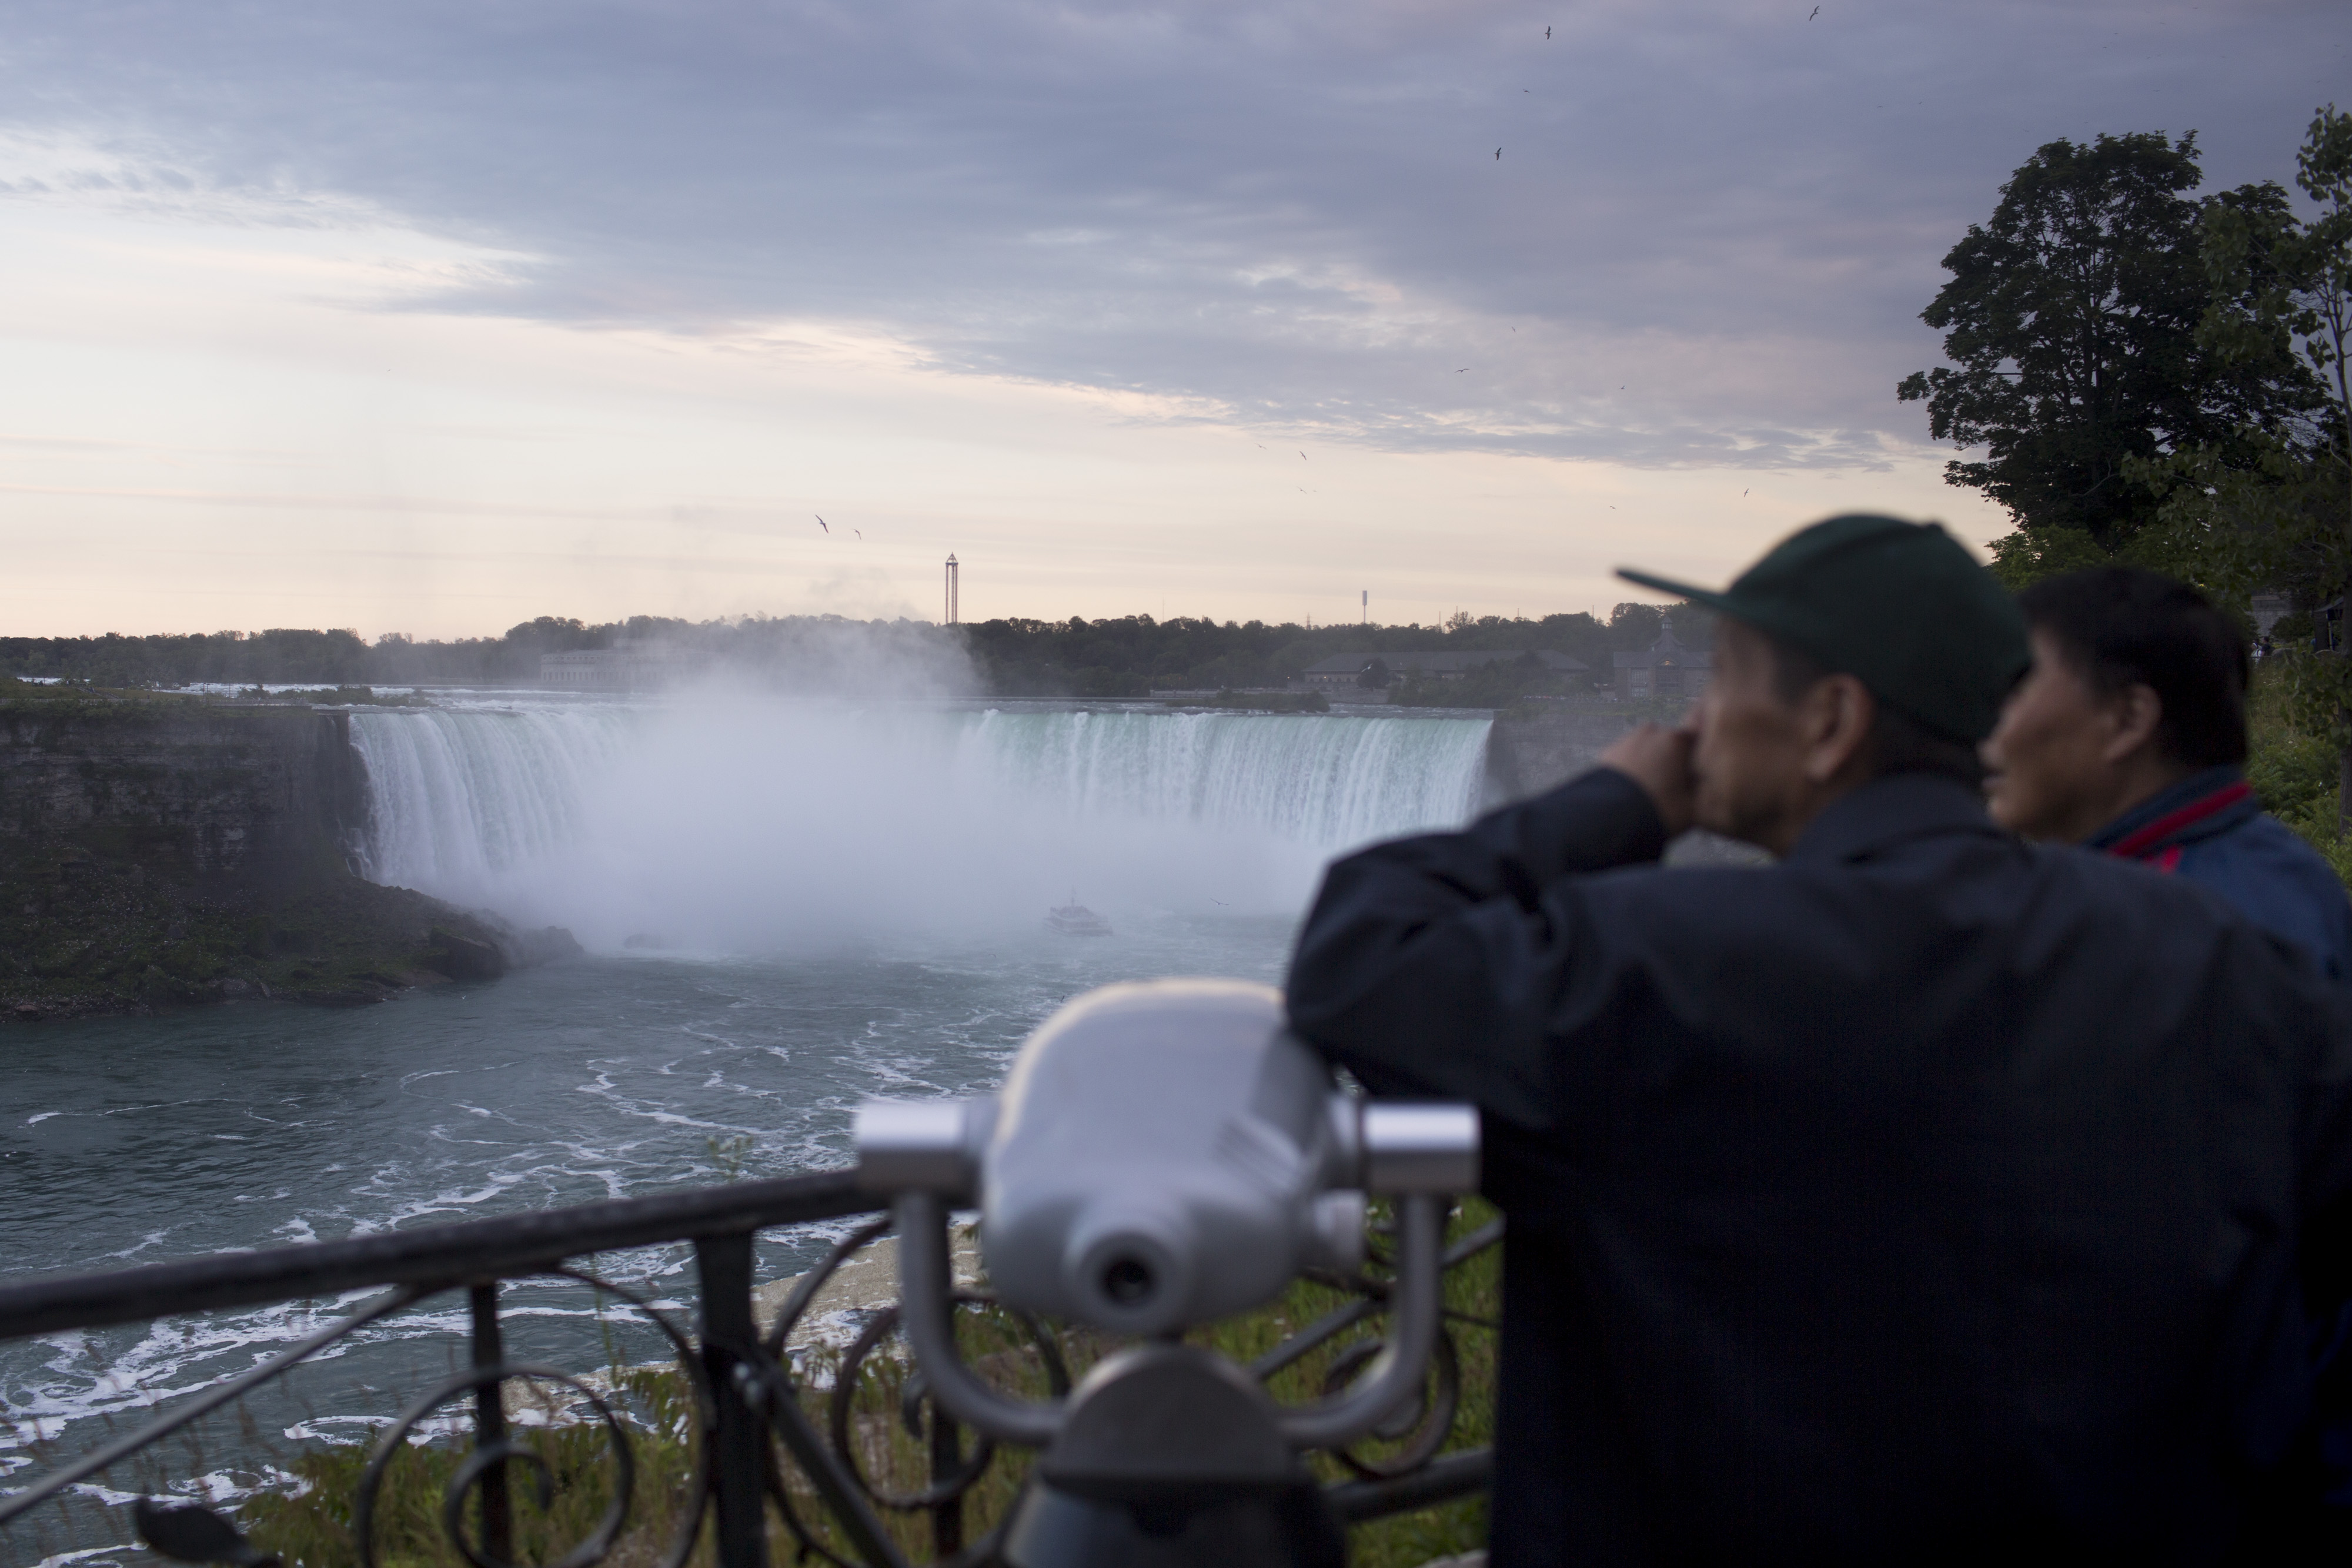 Man survives being swept over Niagara Falls